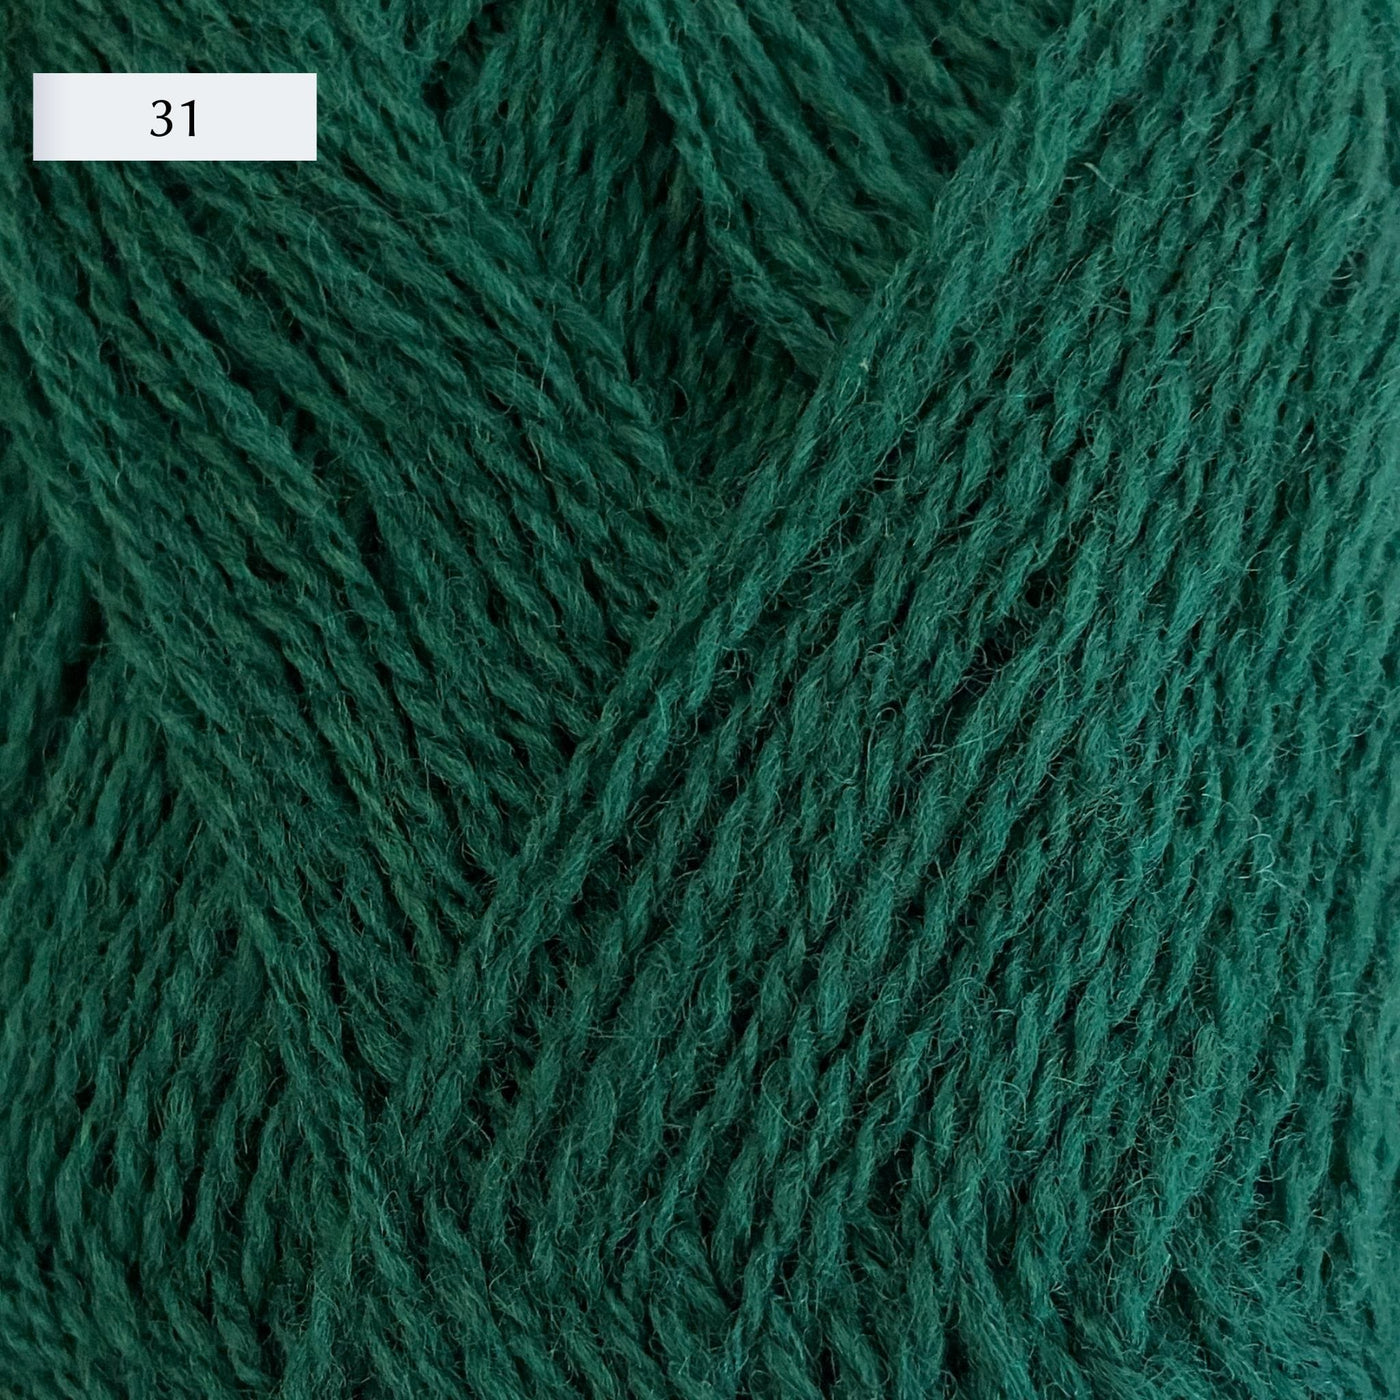 Rauma Lamullgarn, a fingering weight yarn, in color 31, a medium green with blue tones